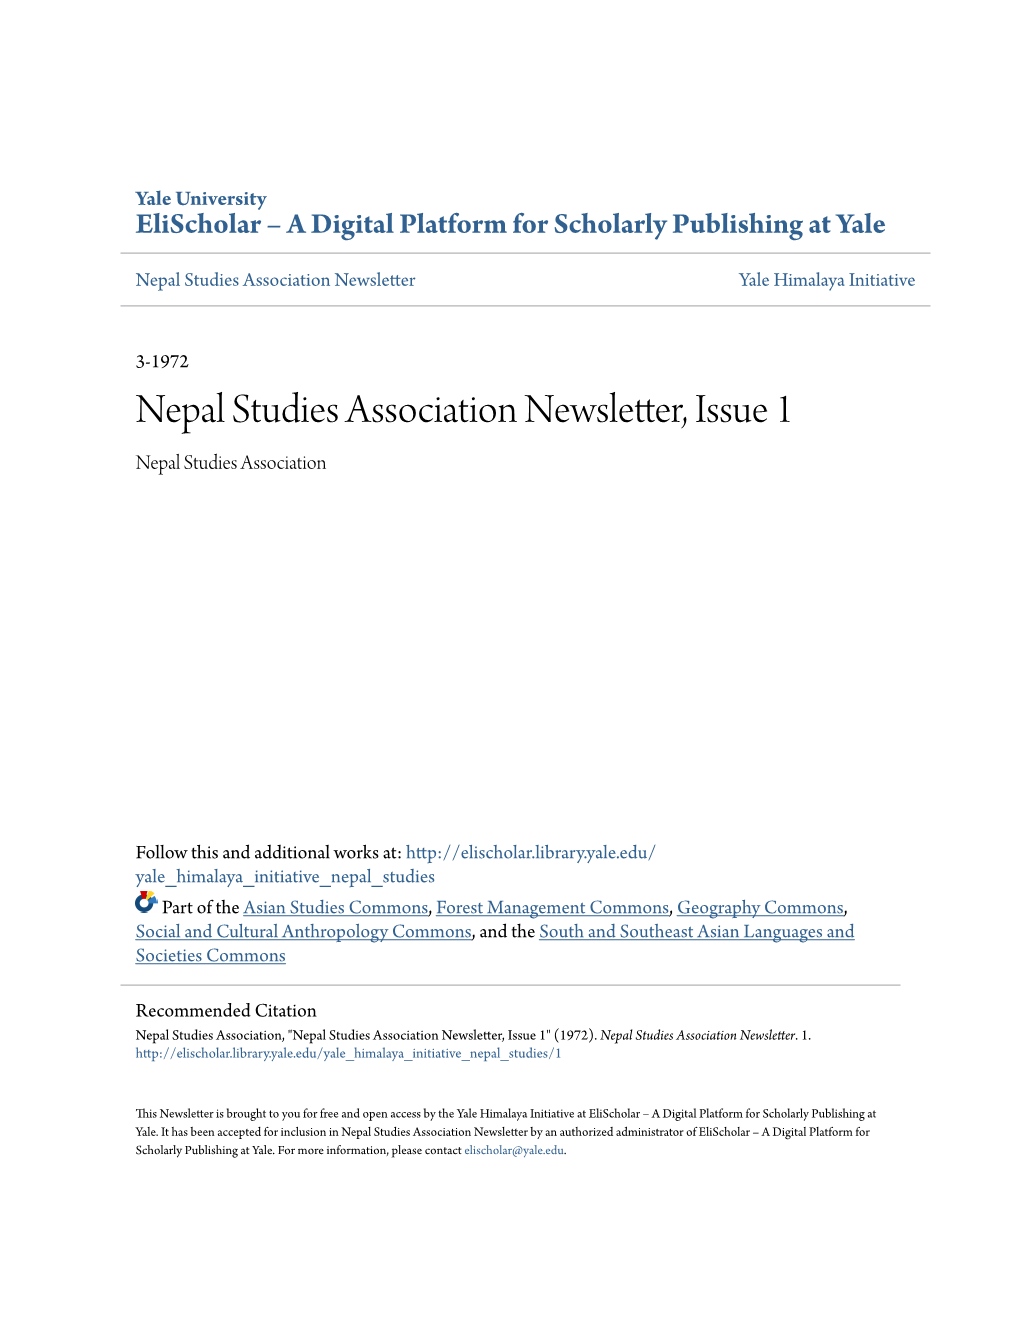 Nepal Studies Association Newsletter, Issue 1 Nepal Studies Association